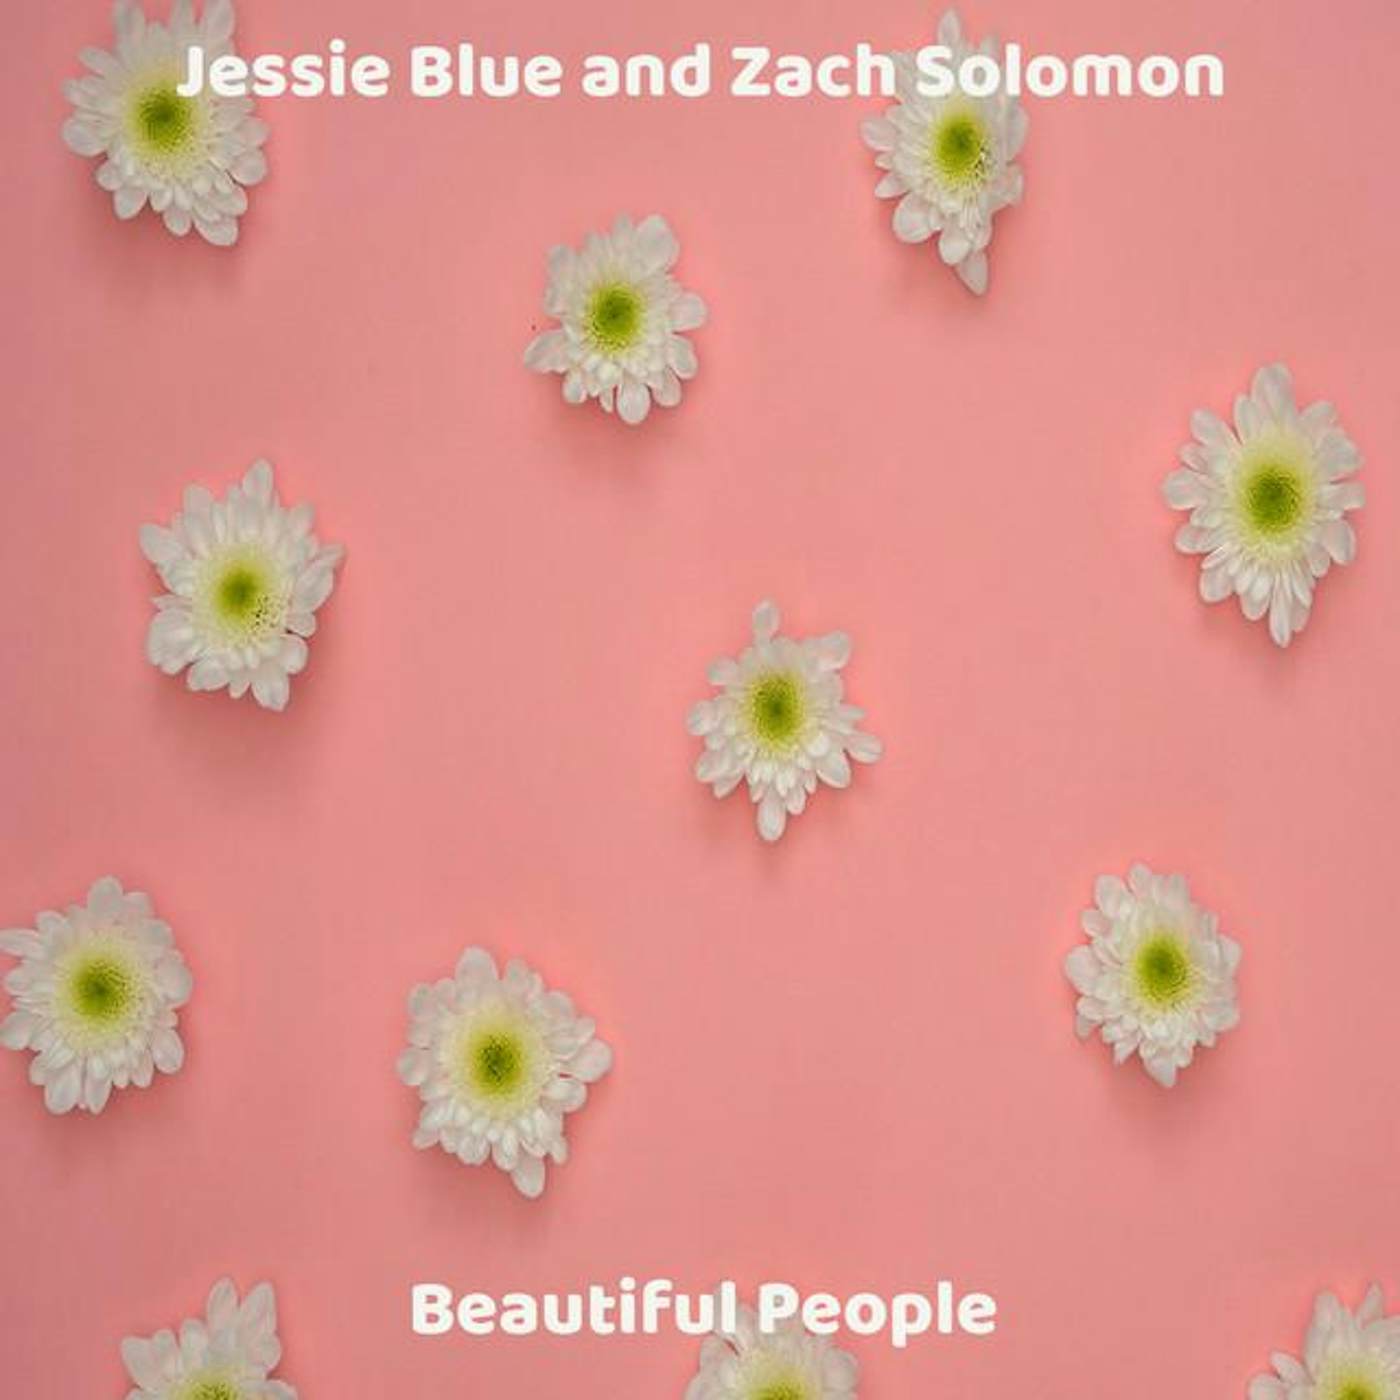 Jessie Blue and Zach Solomon